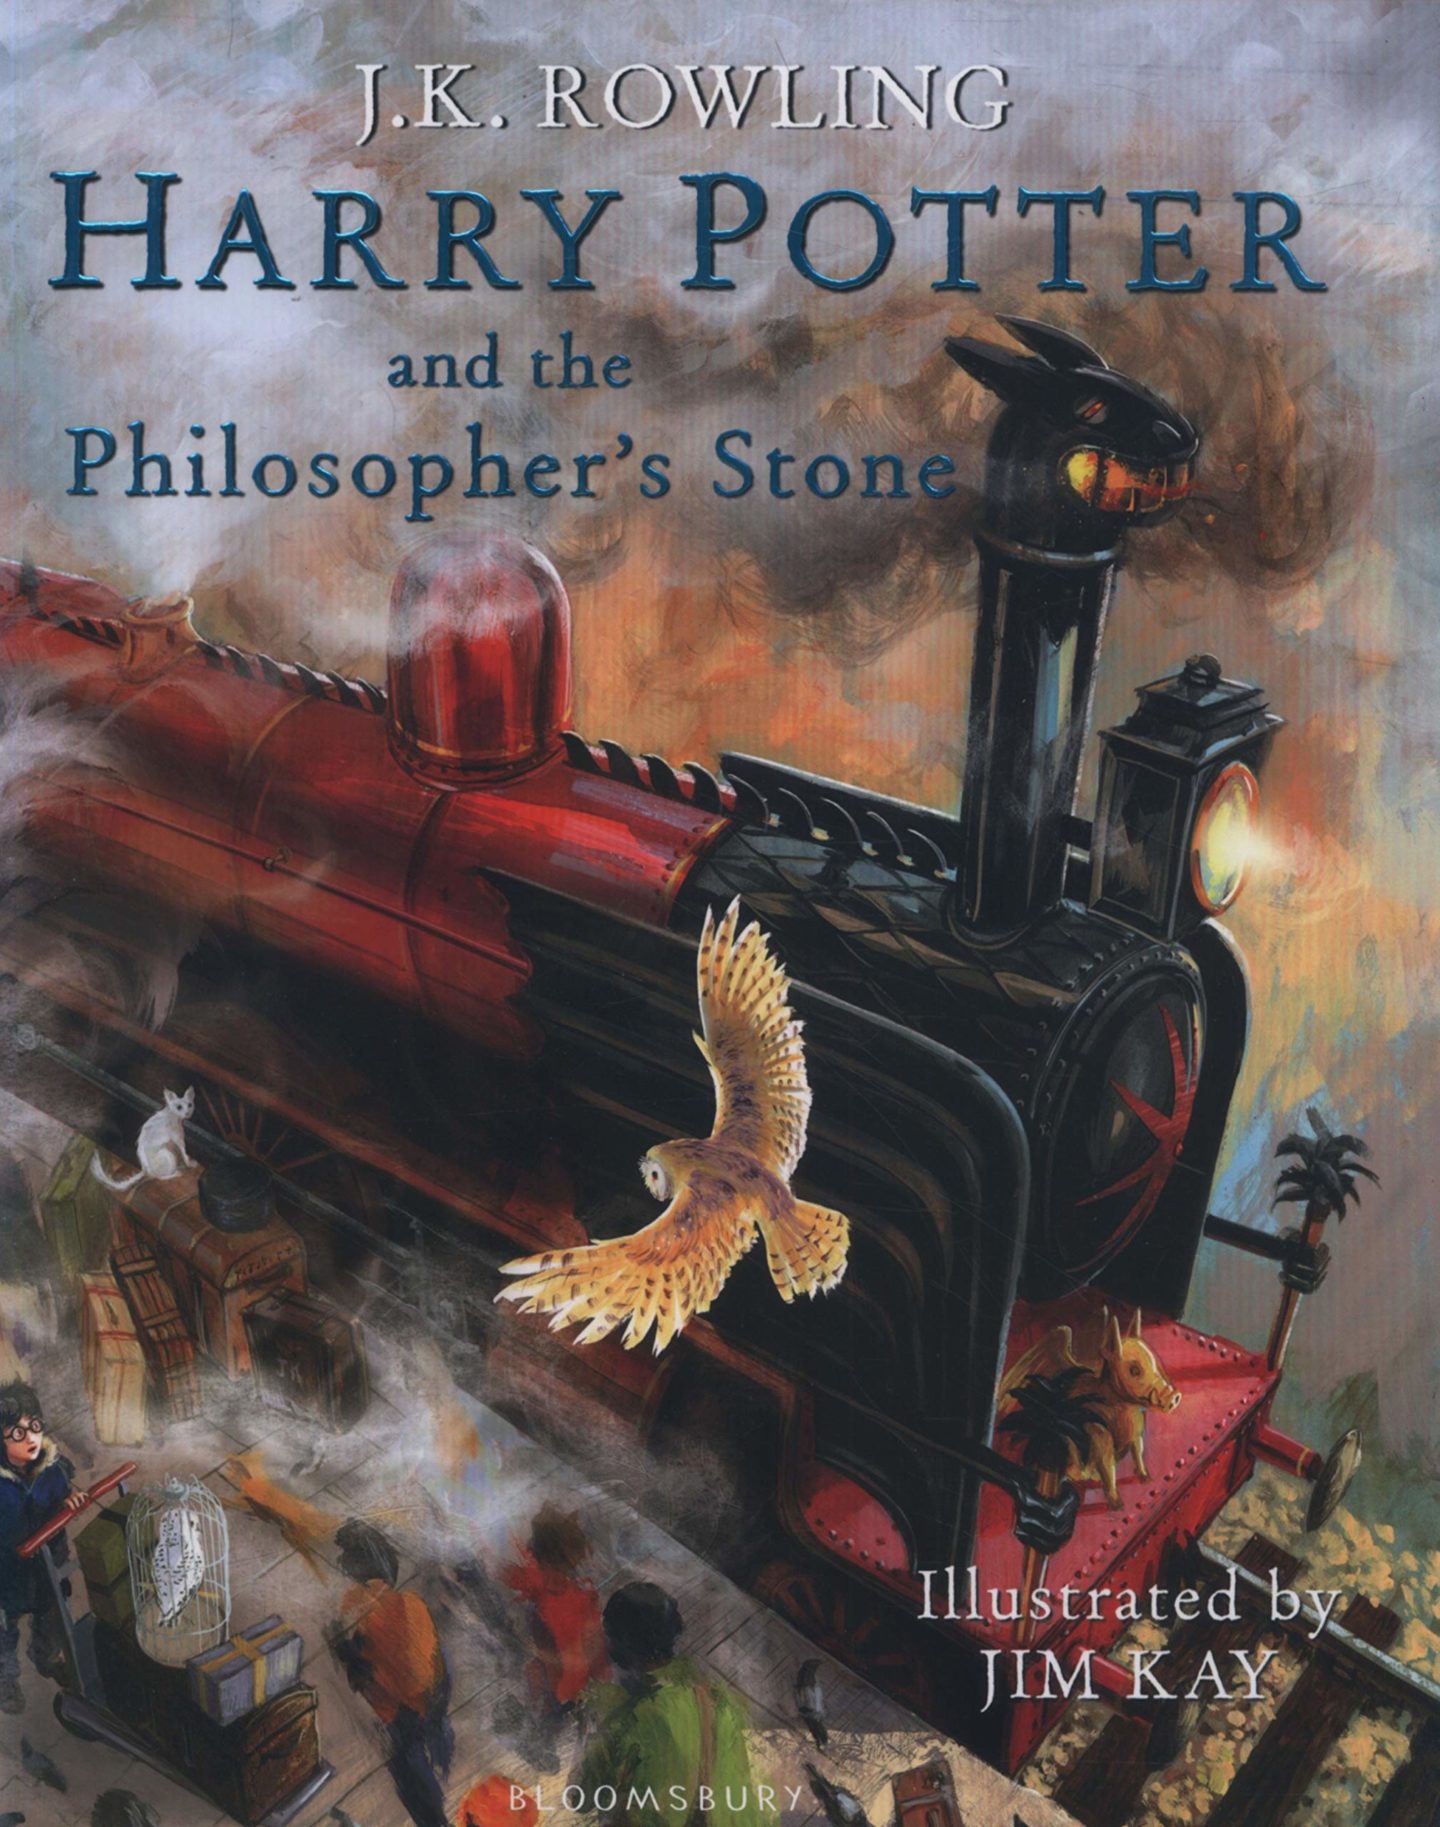 Best Harry Potter gifts for Children